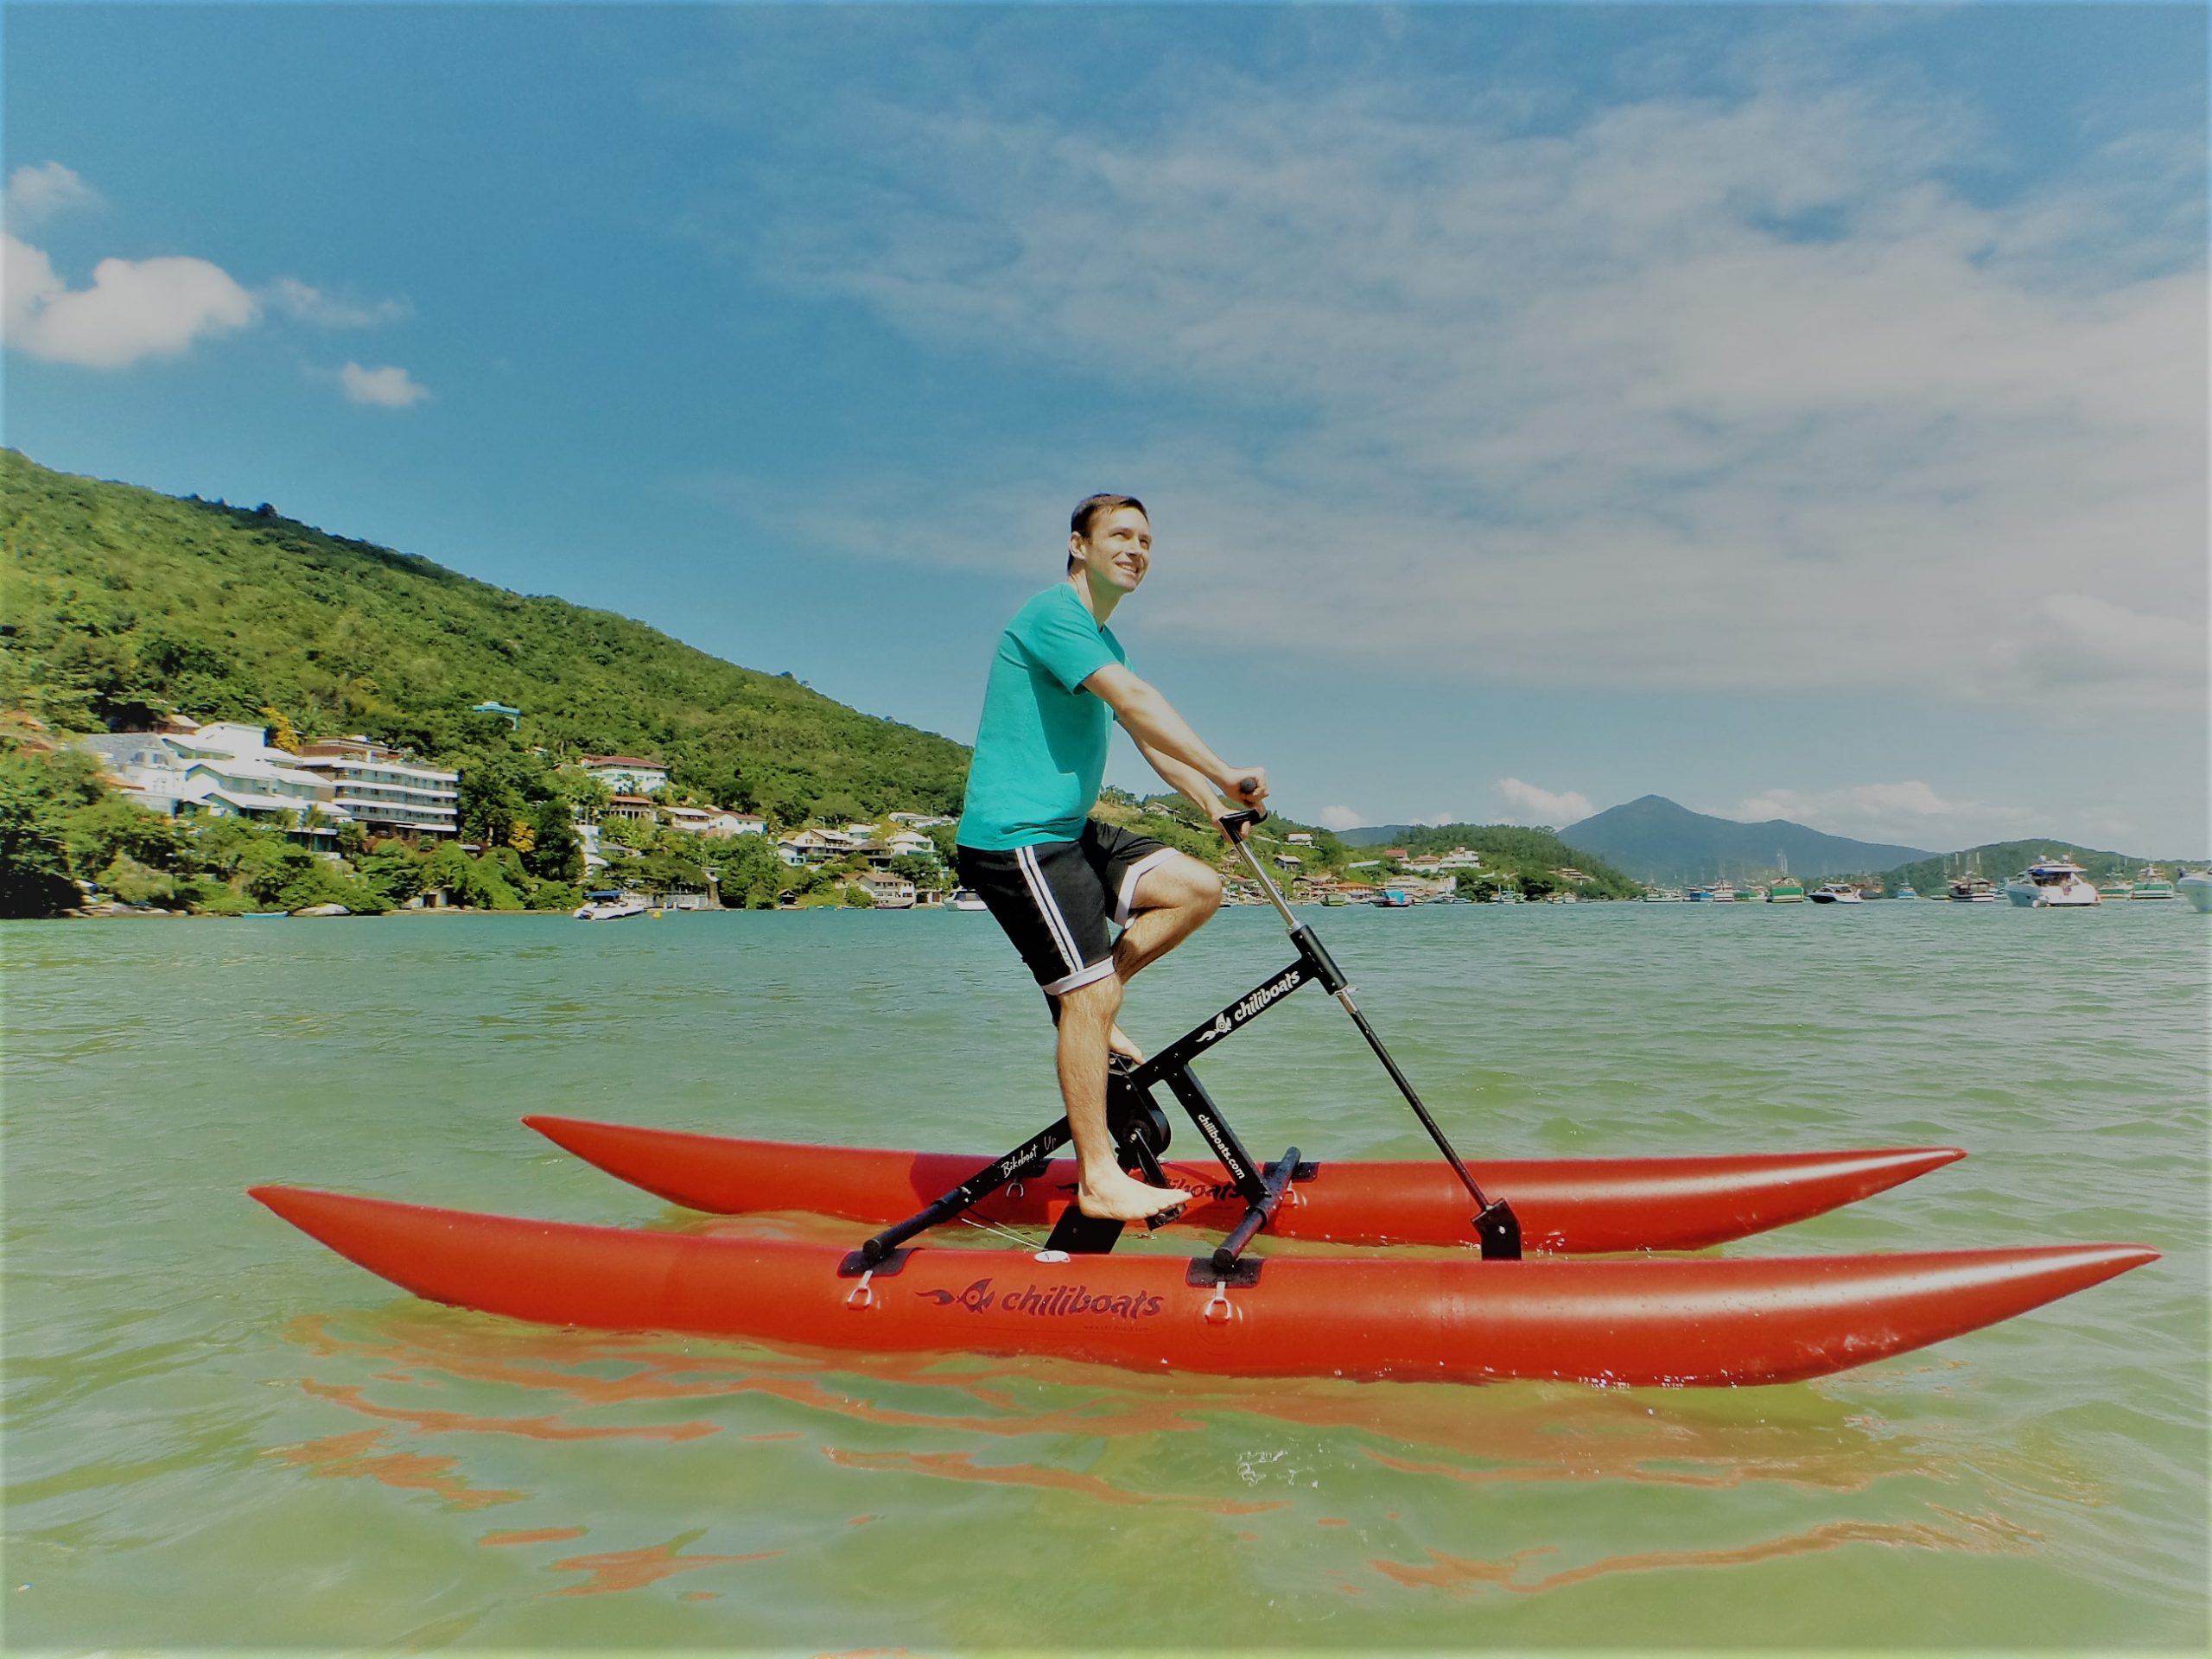 le water bike haute performance - Chiliboats Europe